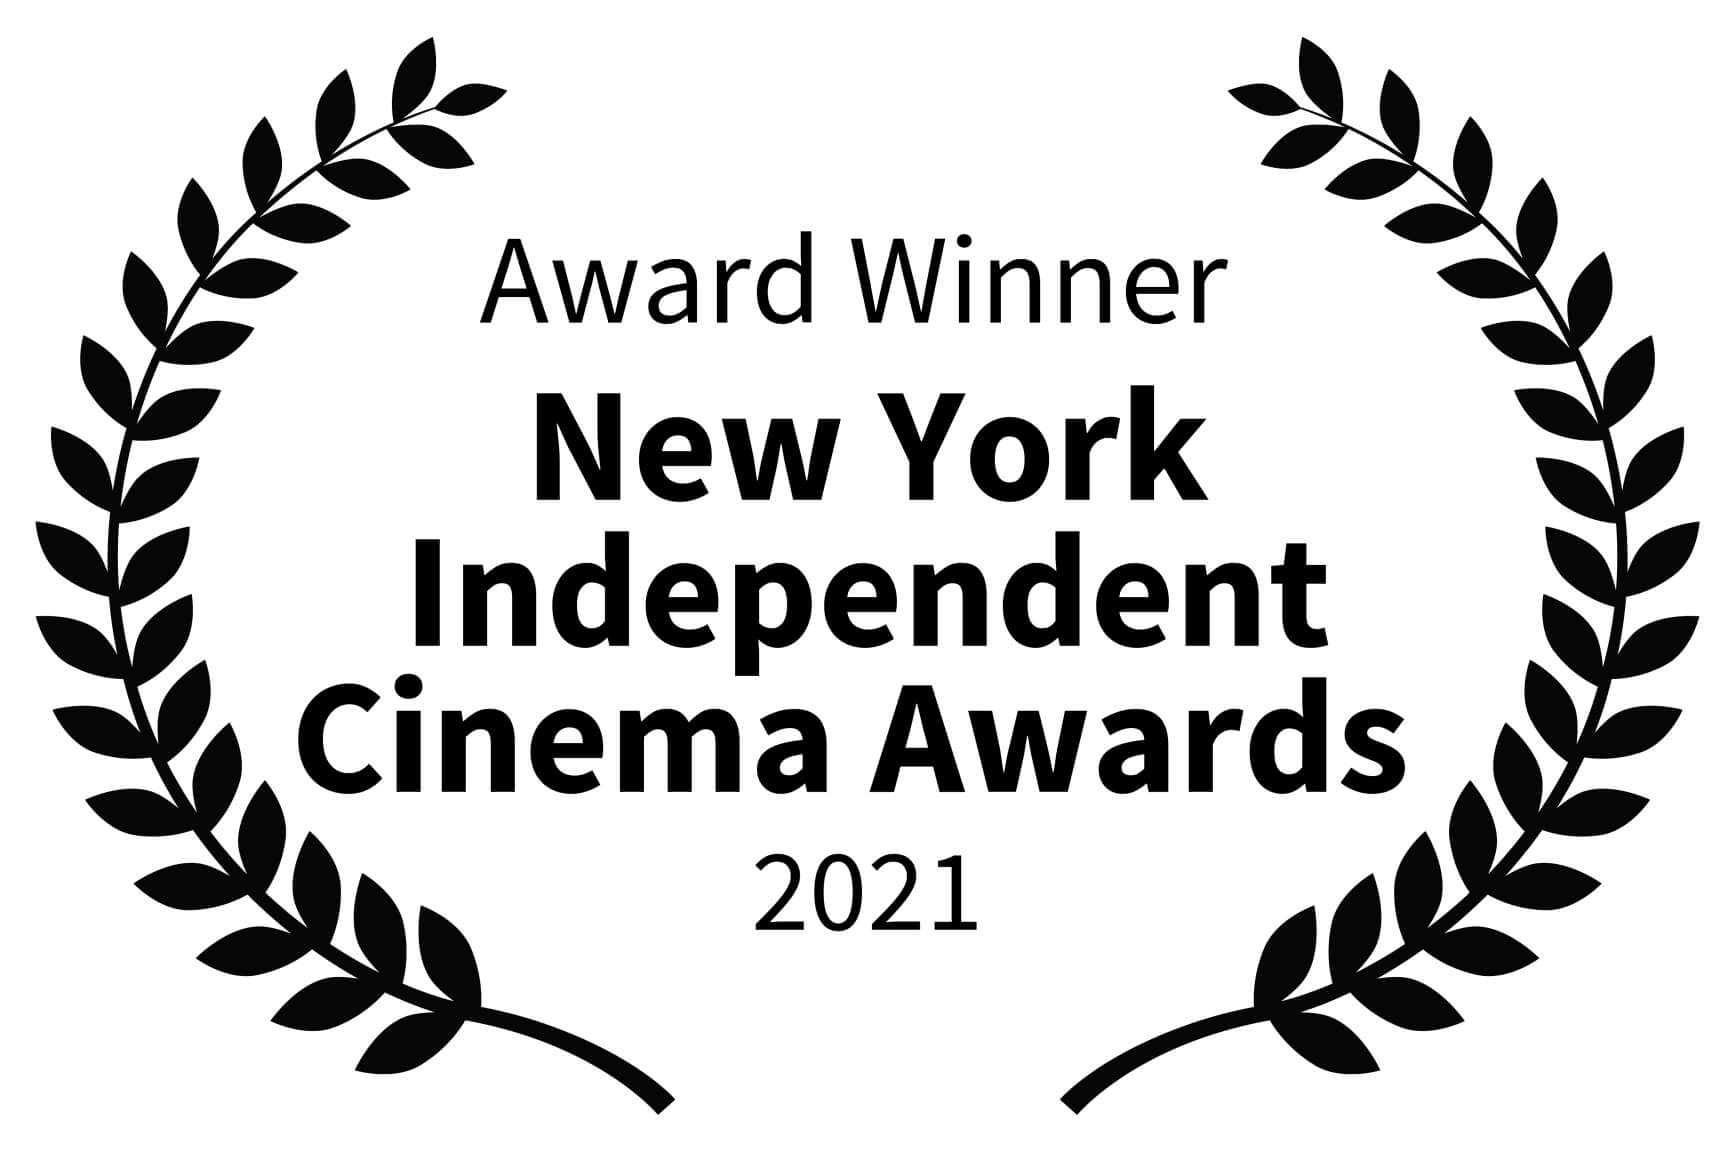 Award Winner - New York Independent Cinema Awards 2021